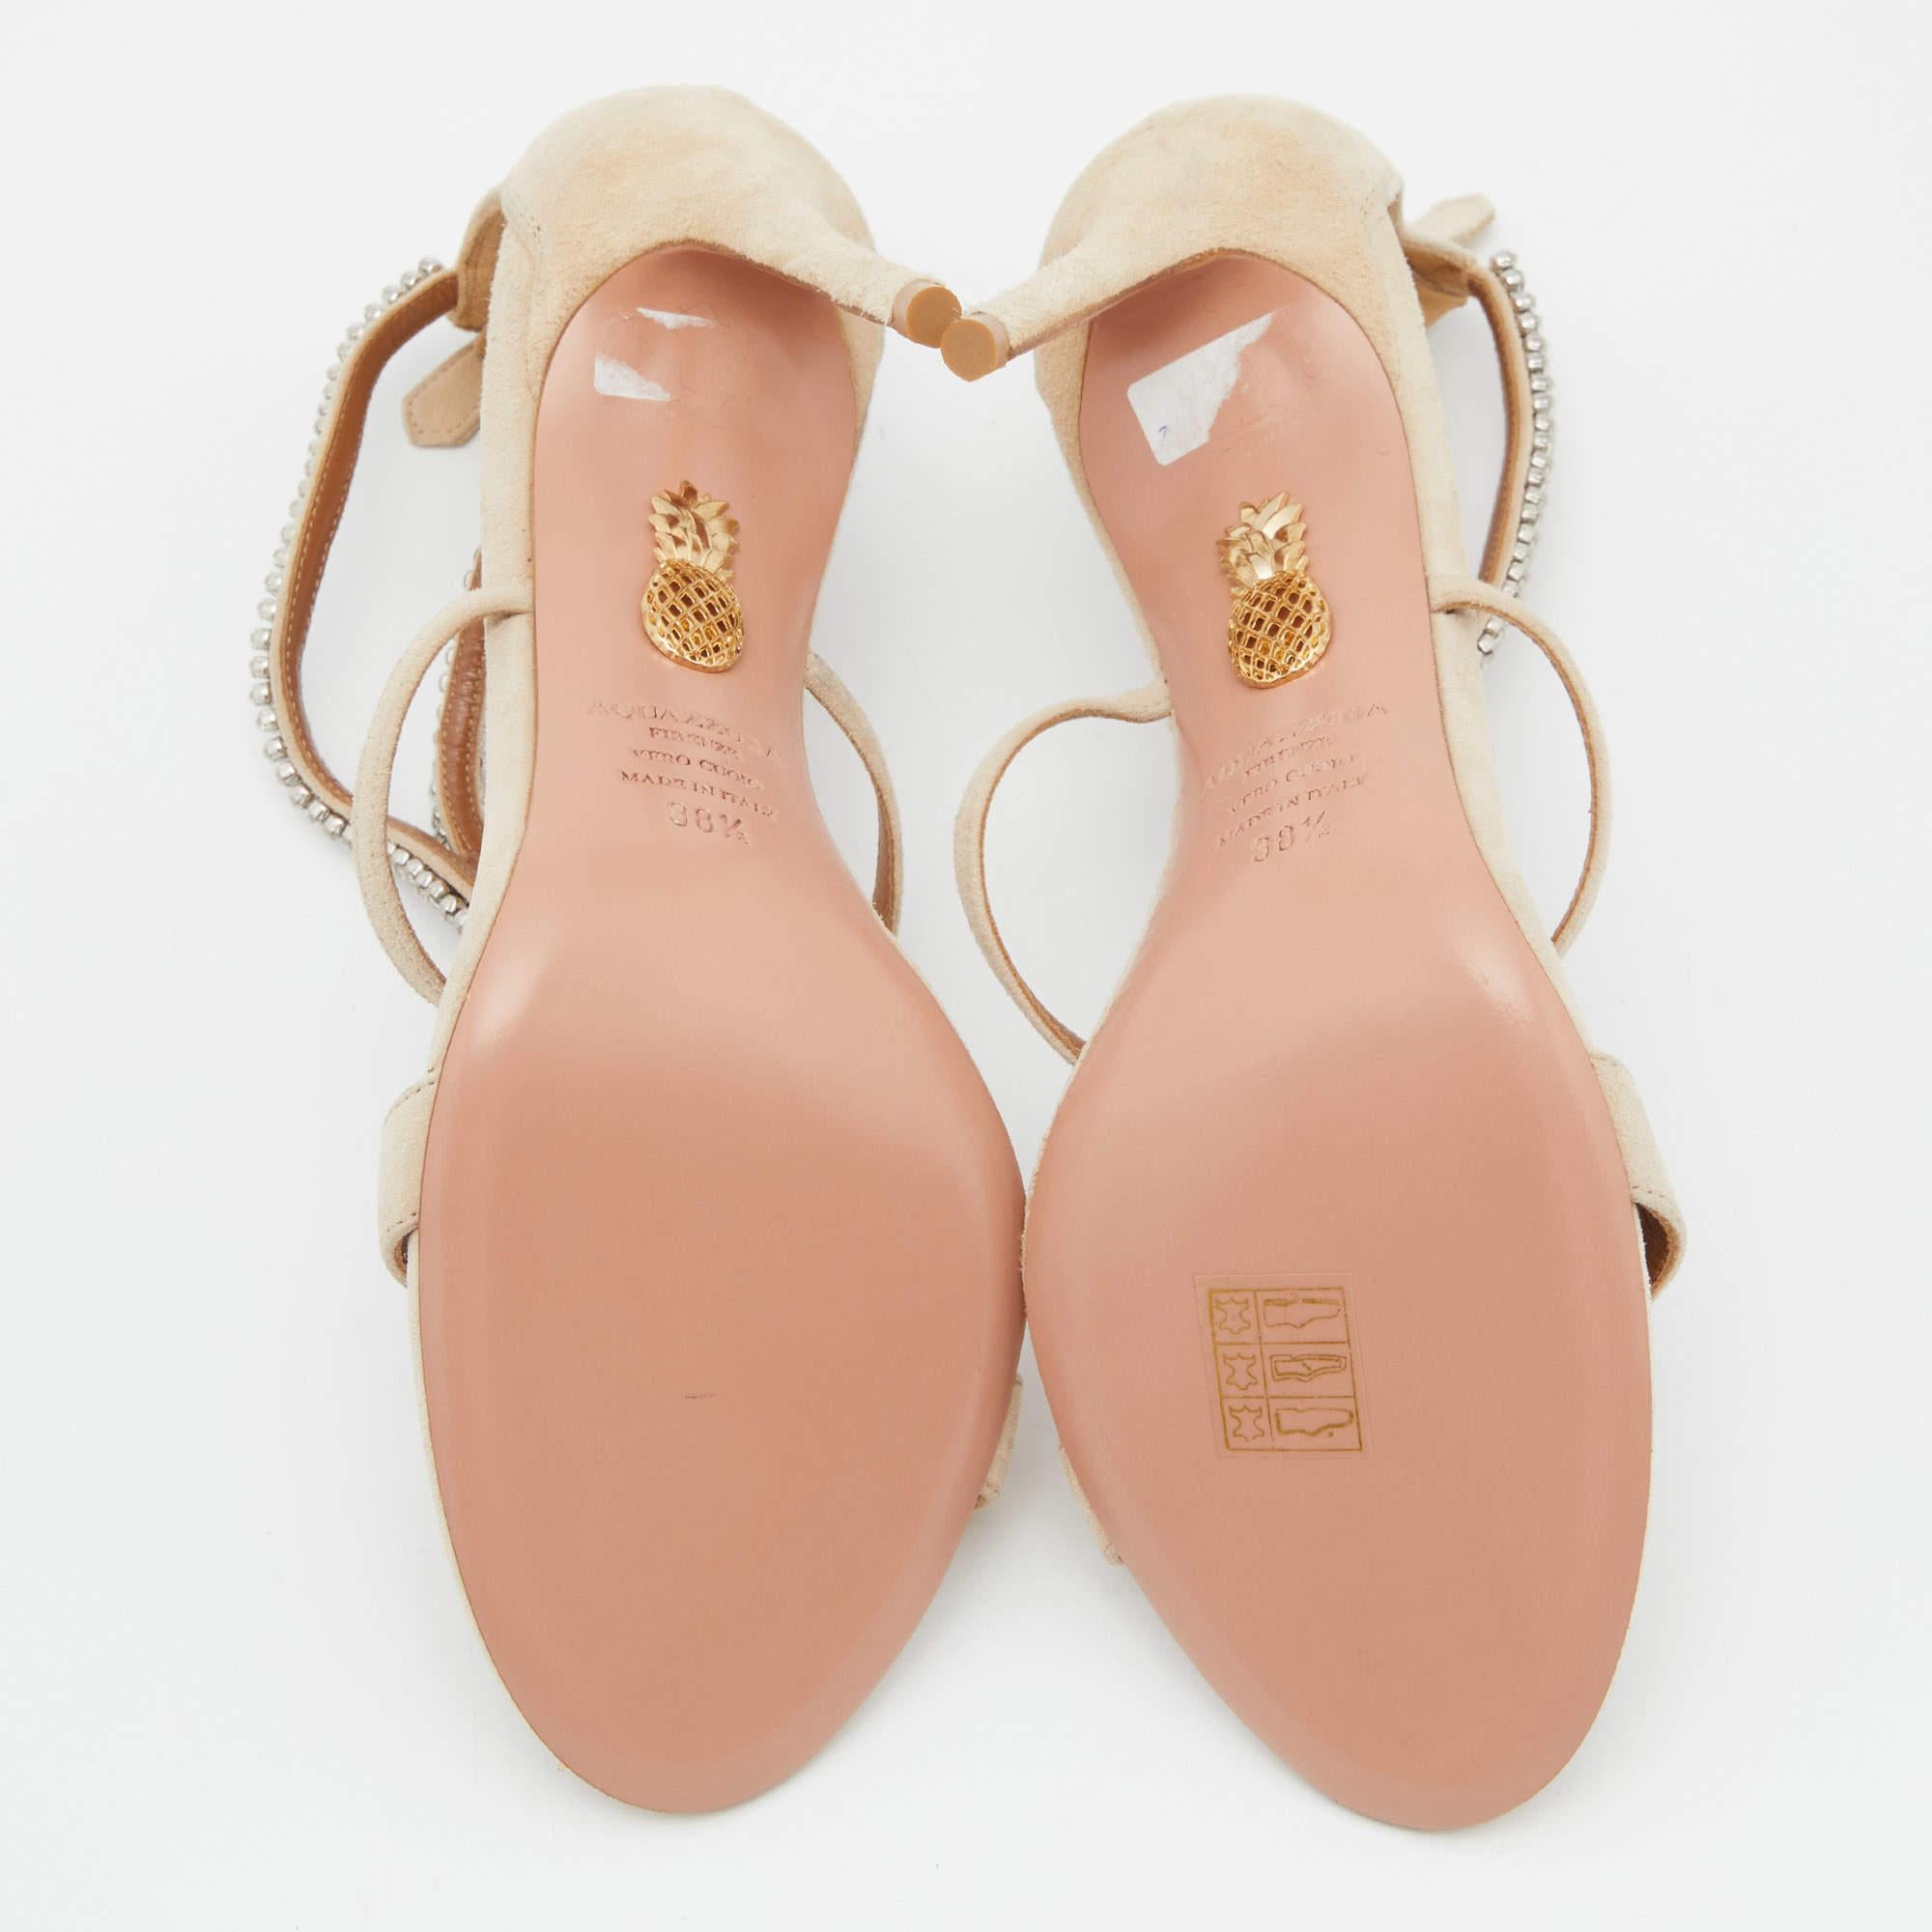 Aquazzura Beige Suede Crystal Embellished Strappy Sandals Size 38.5 4